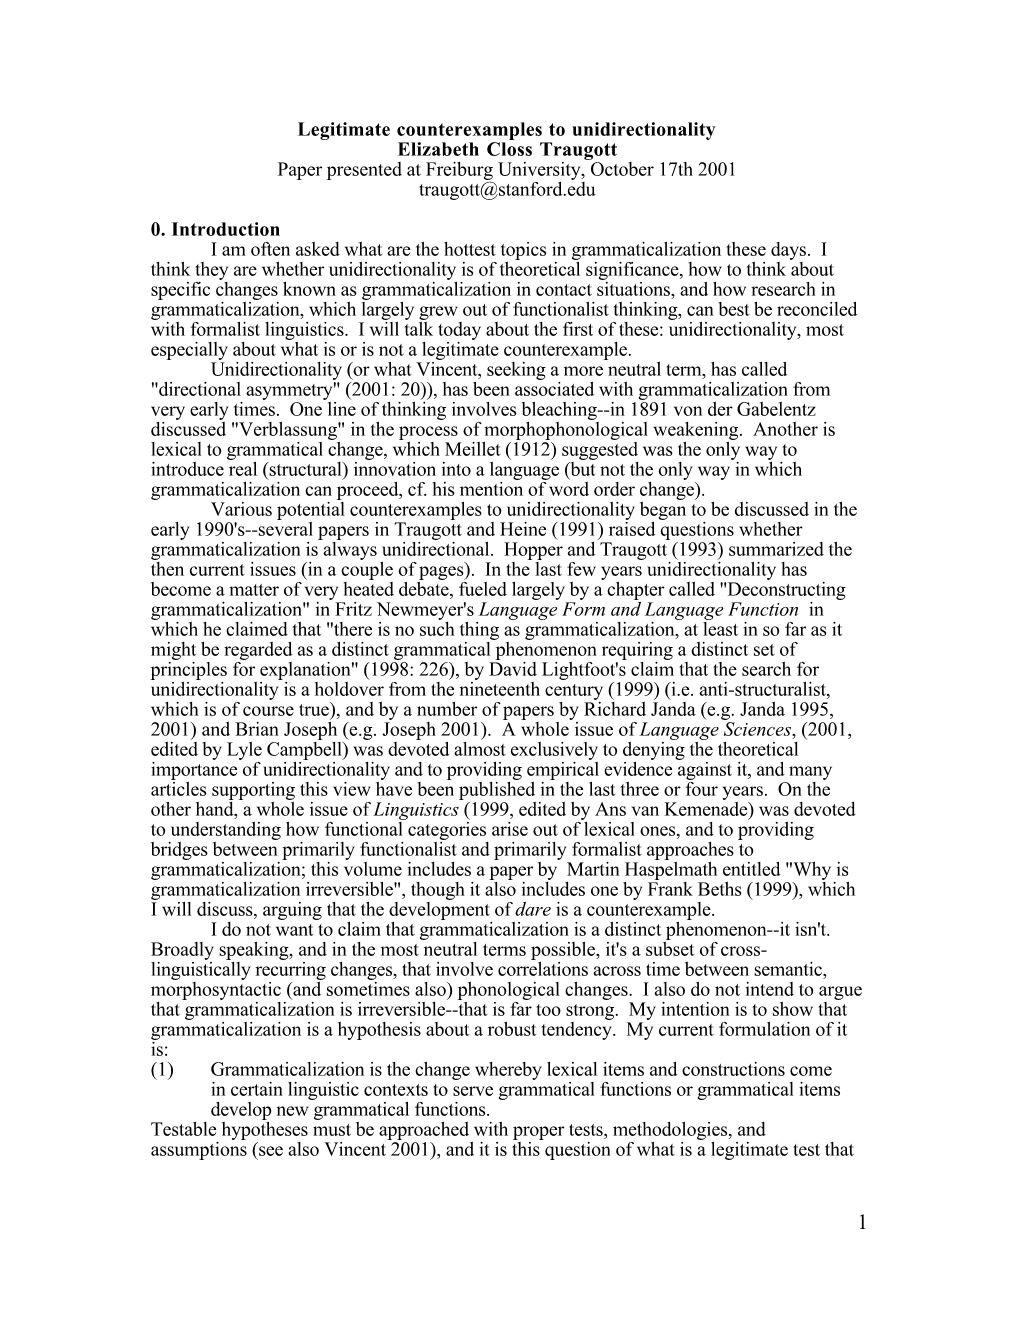 Legitimate Counterexamples to Unidirectionality Elizabeth Closs Traugott Paper Presented at Freiburg University, October 17Th 2001 Traugott@Stanford.Edu 0